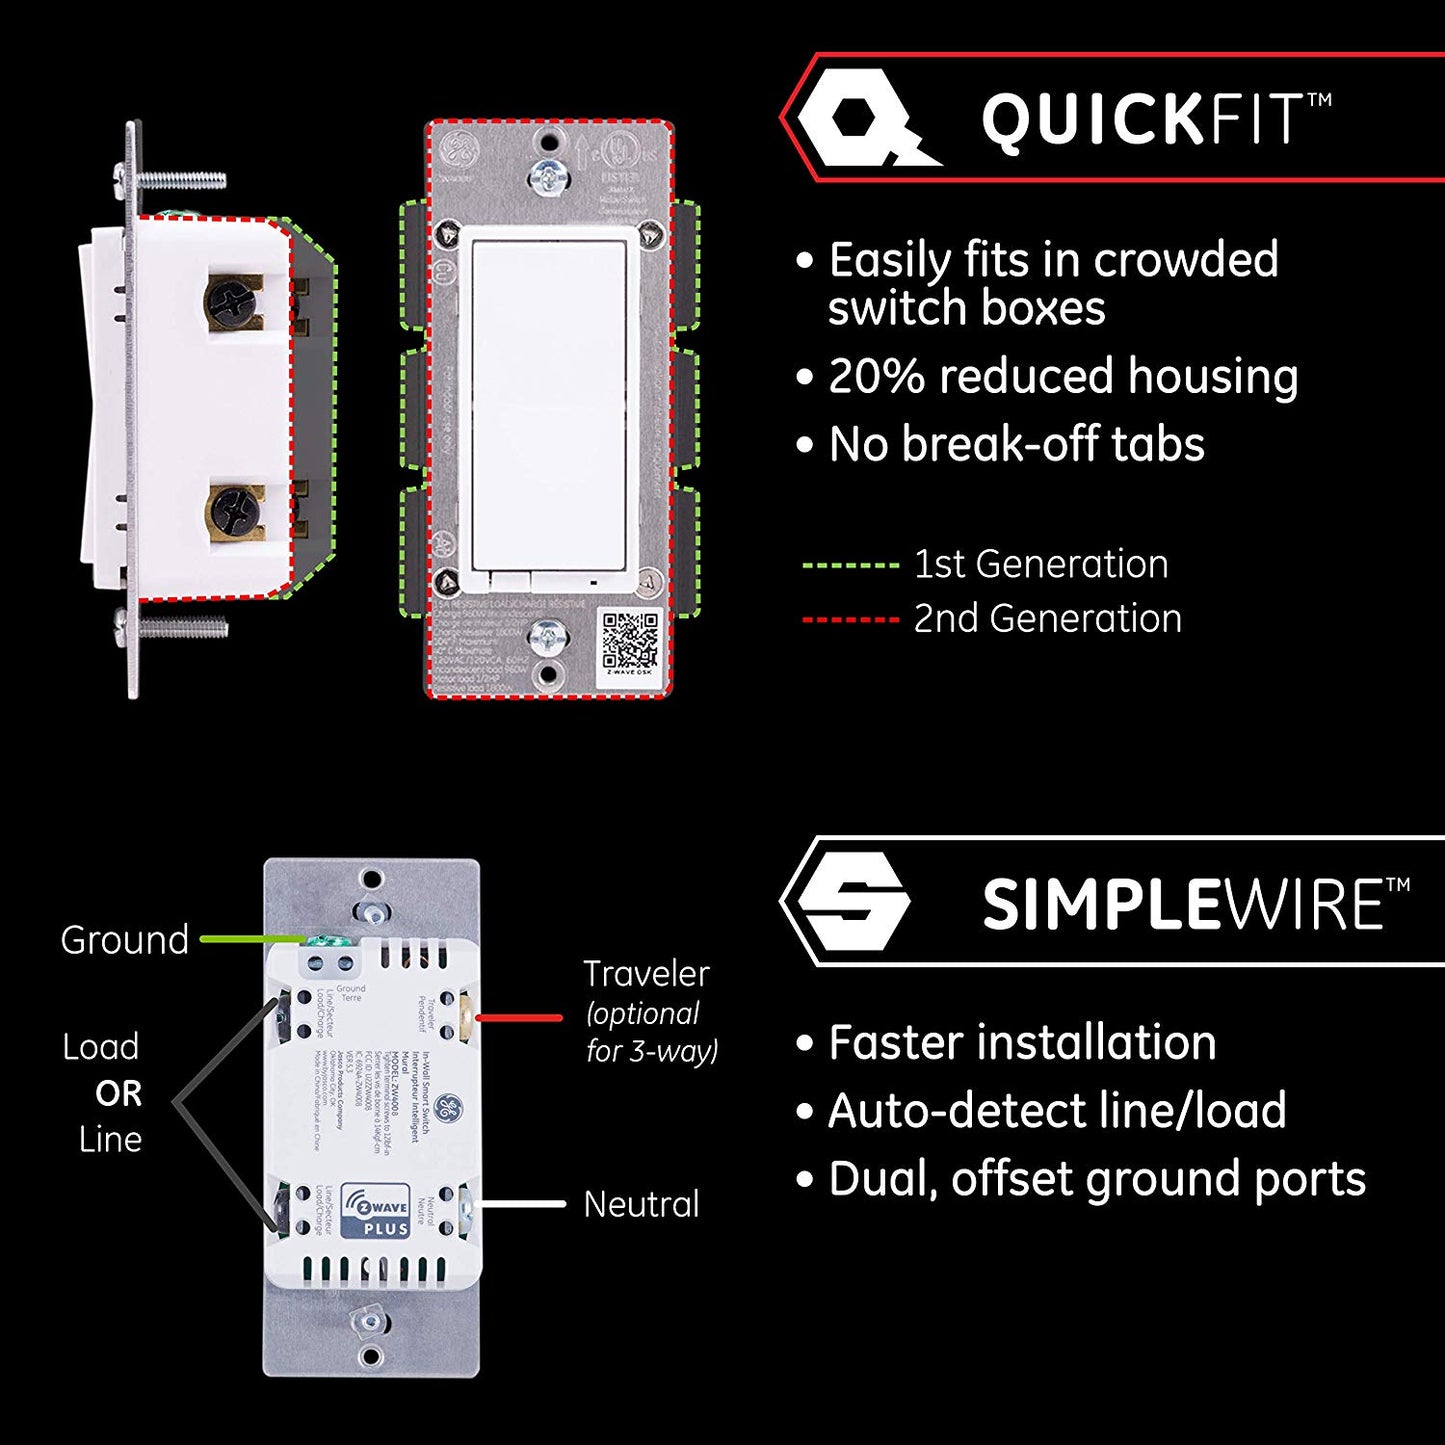 GE Enbrighten Smart Dimmer Light Switch; QuickFit, SimpleWire (46203)